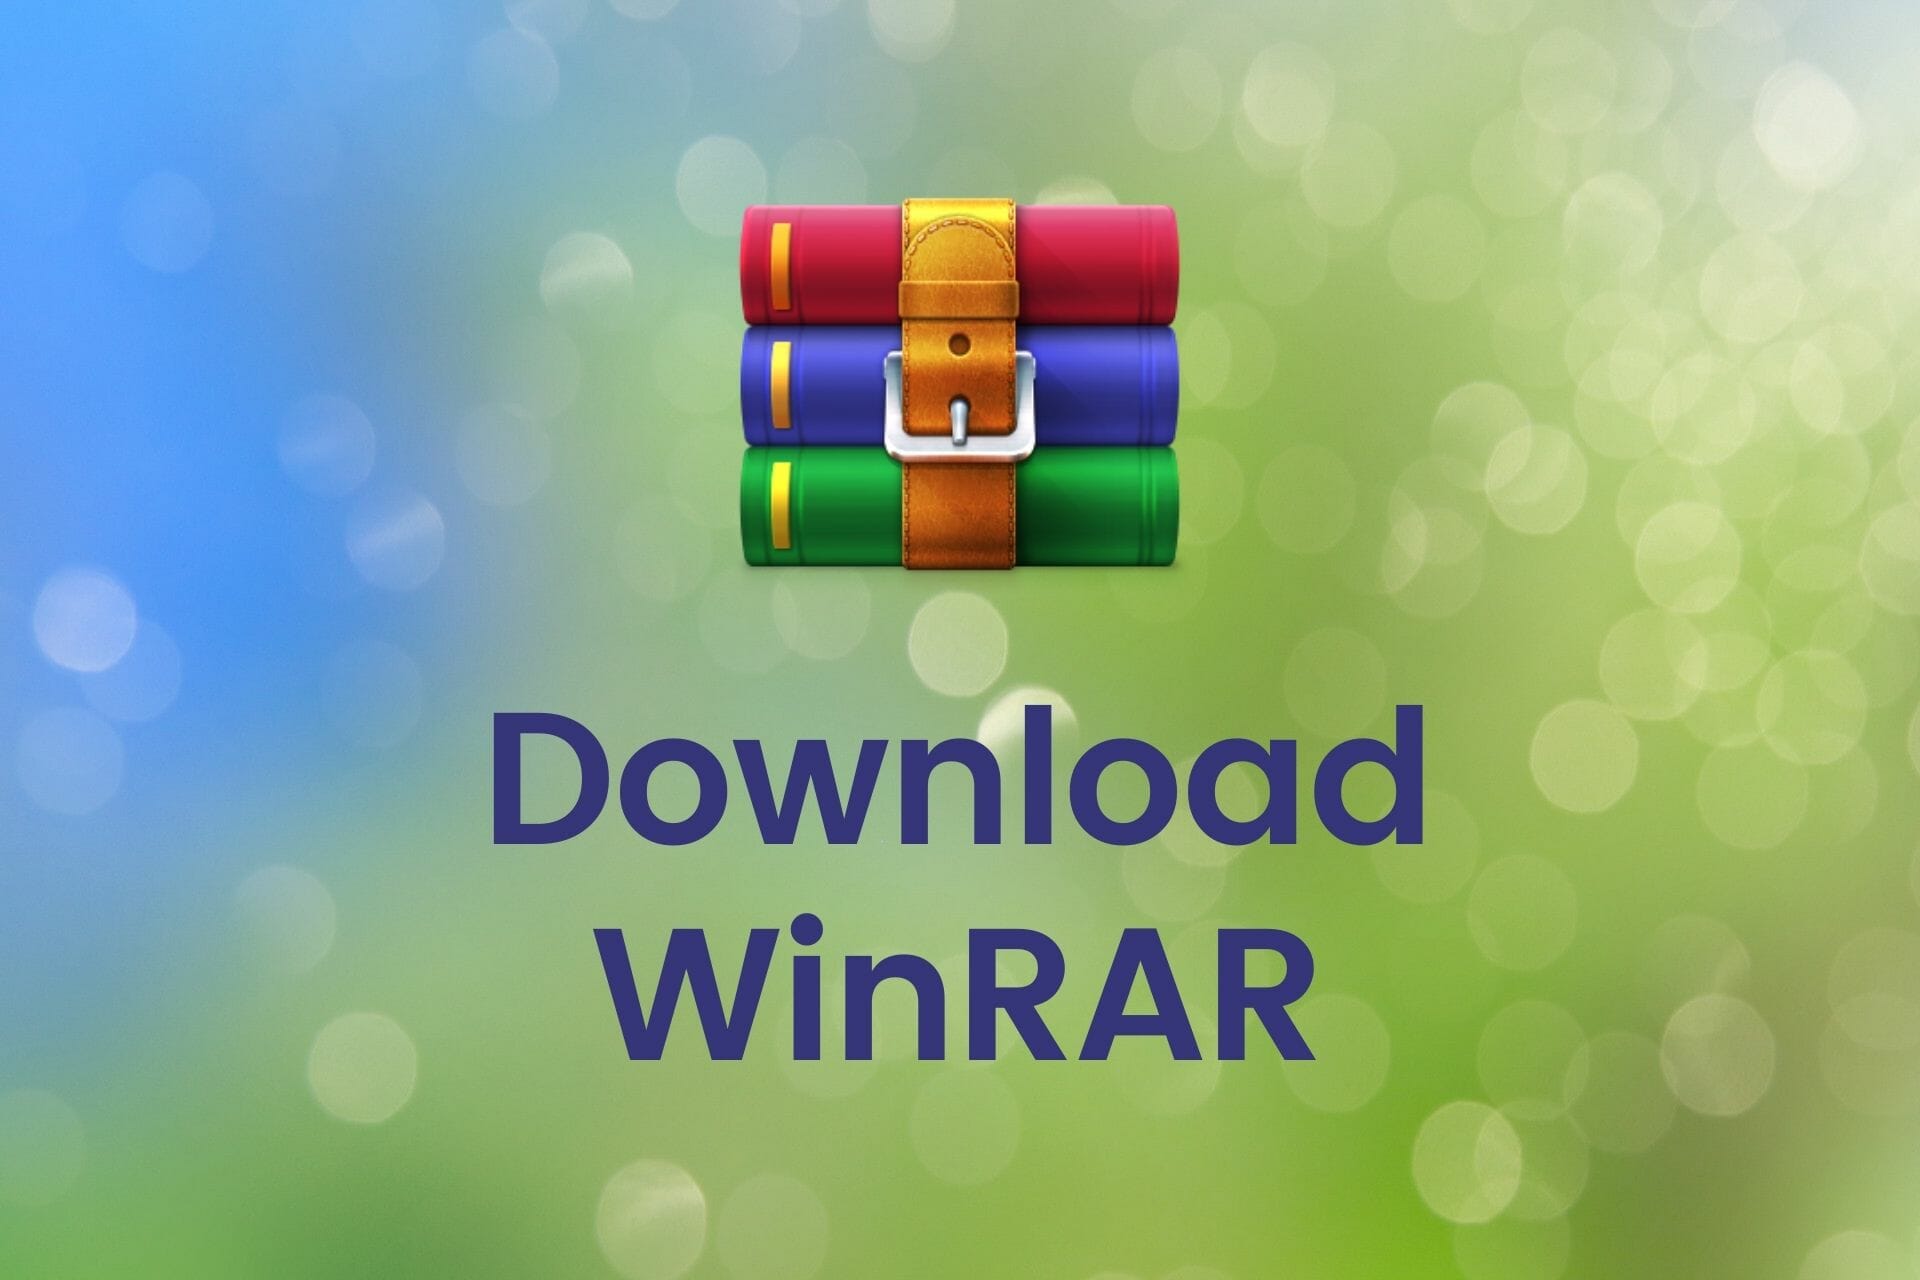 winrar 4.11 64 bit full version free download